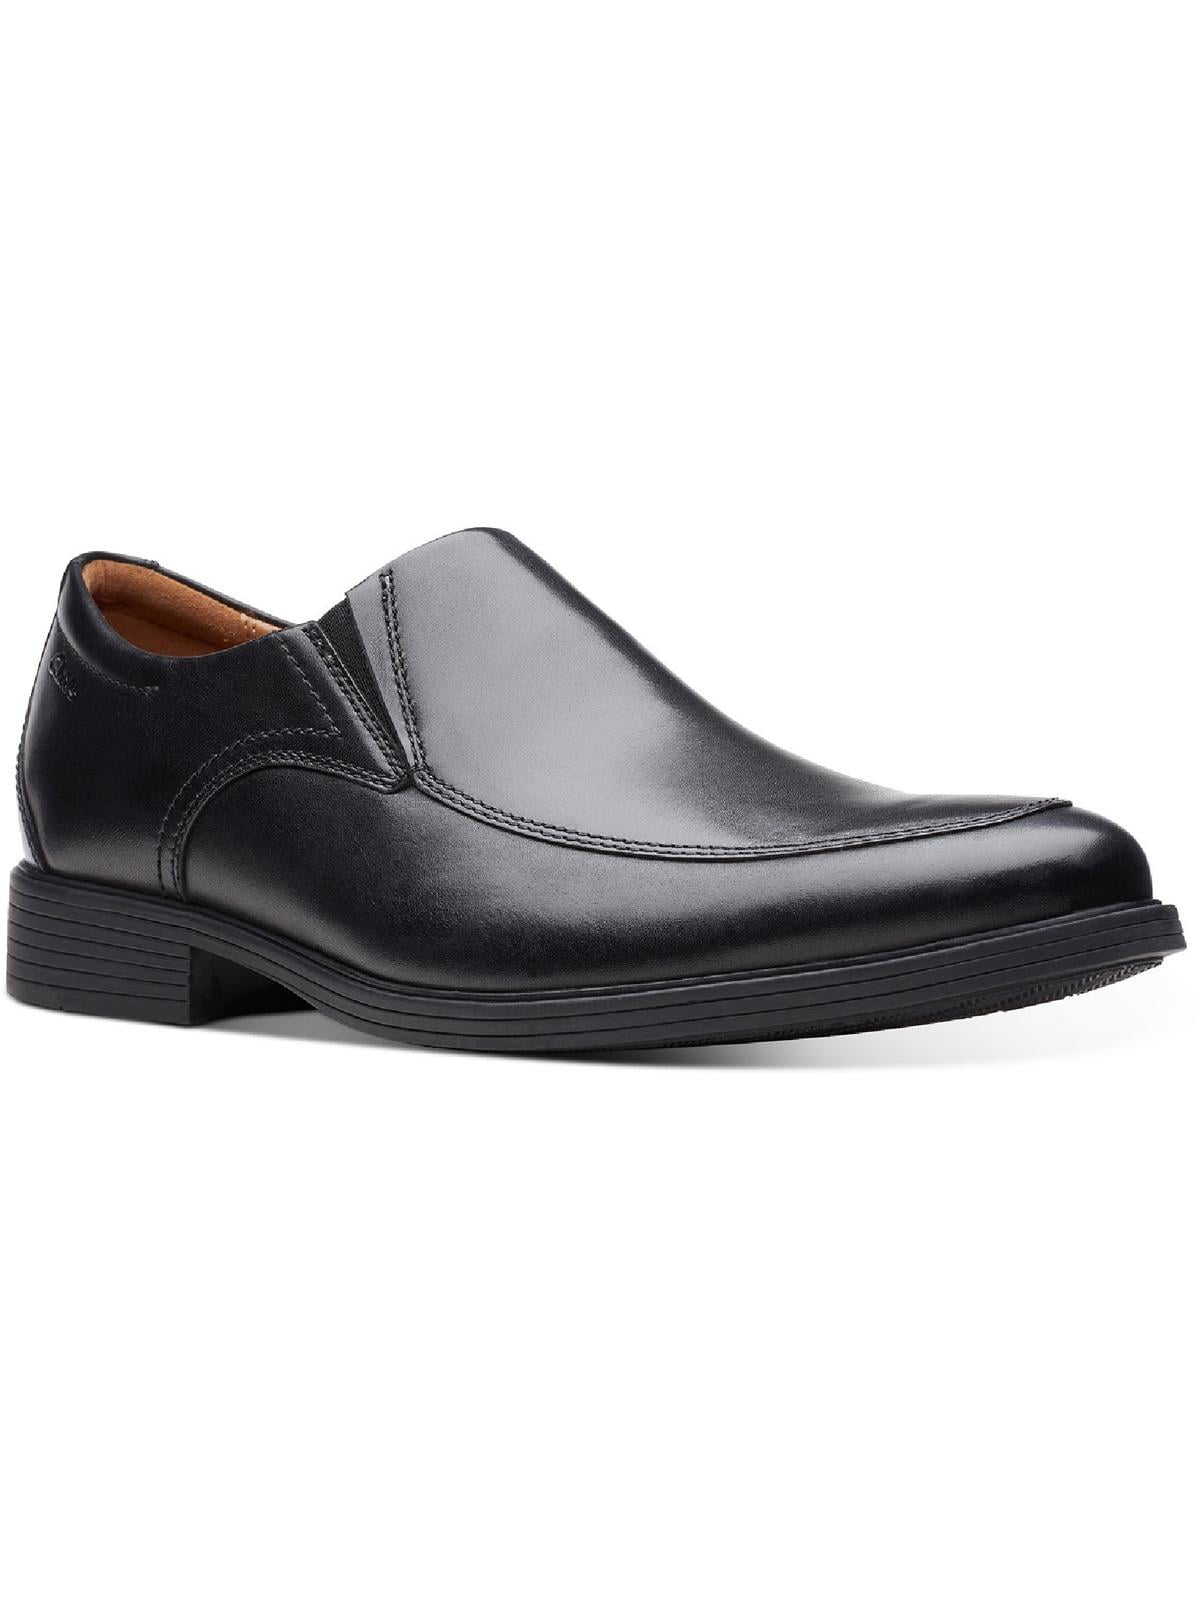 Mens Slip-on shoes Clarks Slip-on shoes Us Size in Grey for Men Uk Size 9g Eu Size 43 Clarks Grey Textile 